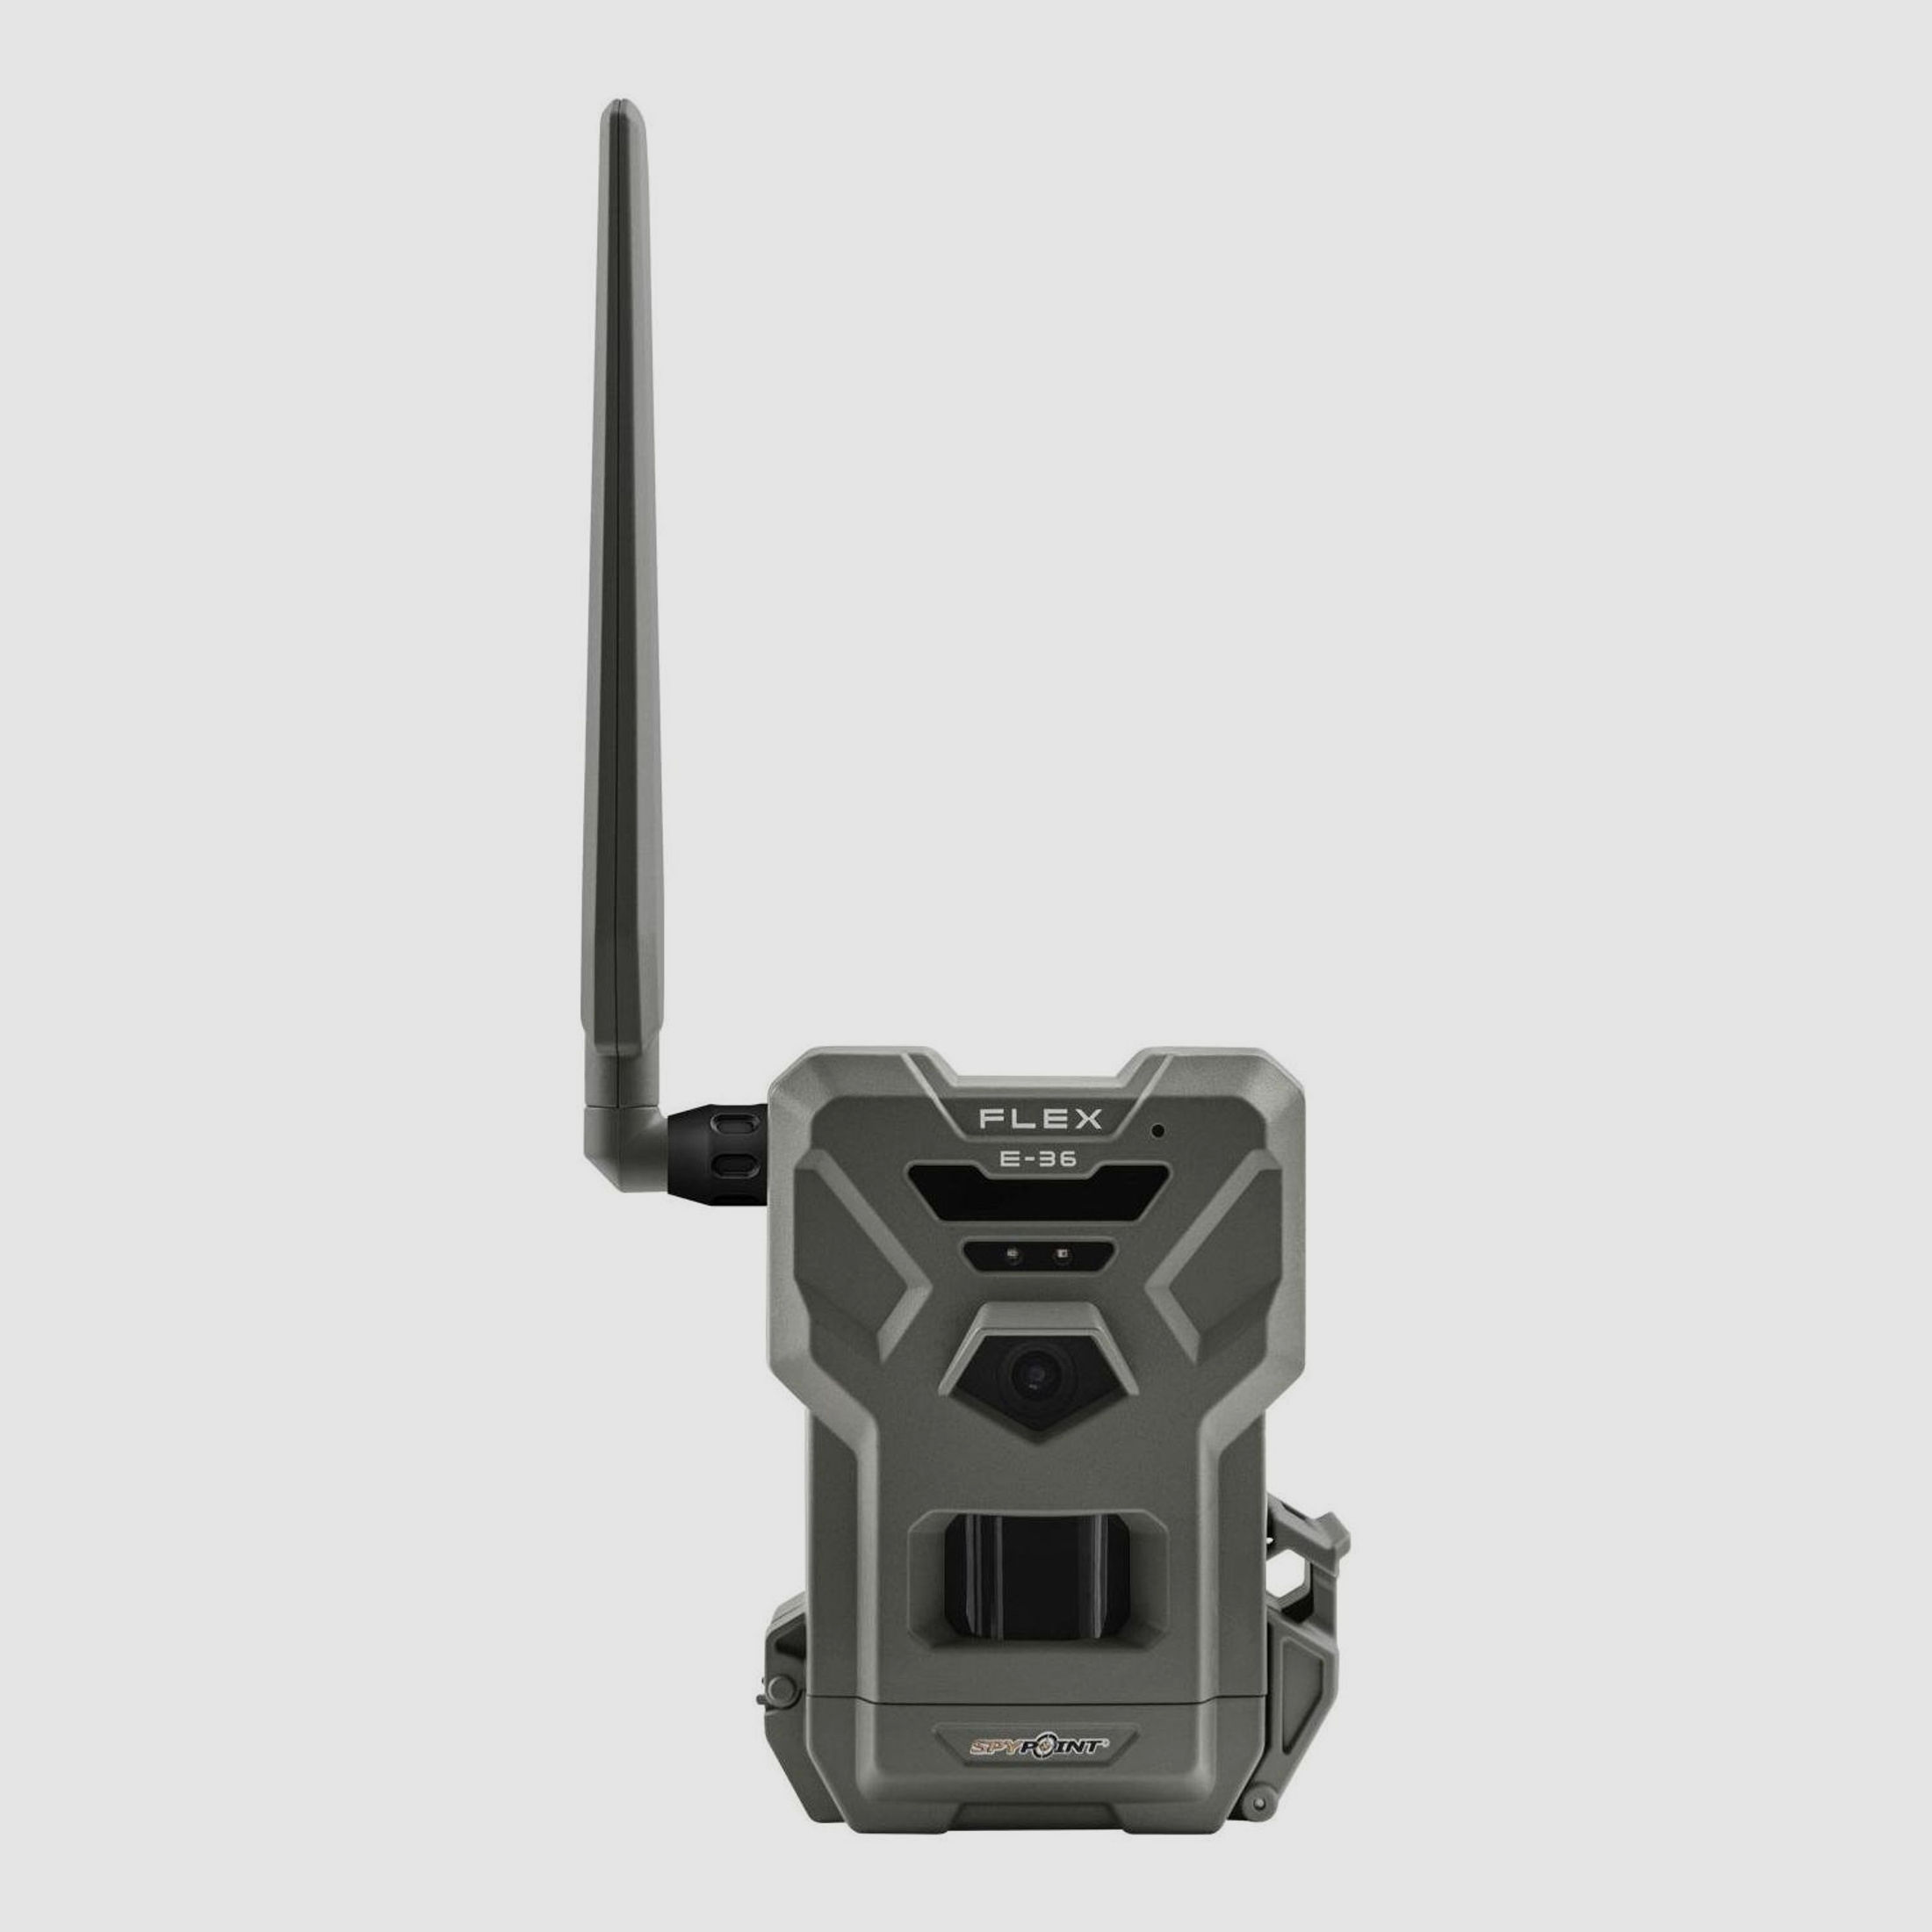 Spypoint Wildkamera FLEX E-36